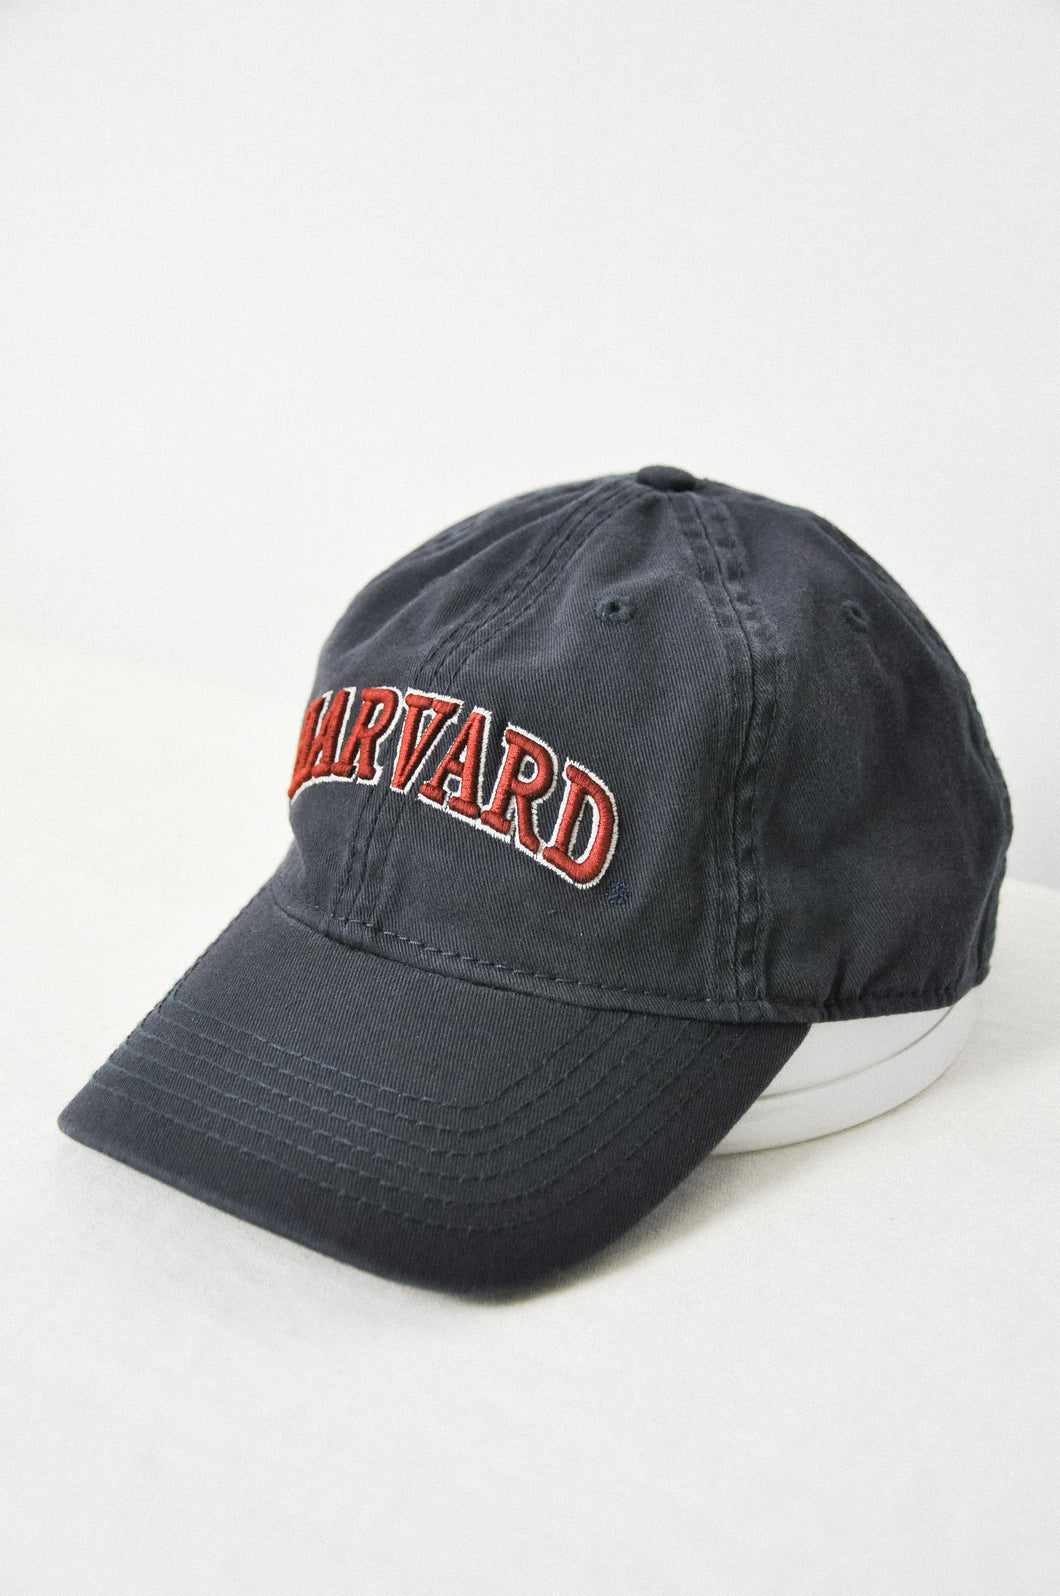 Harvard Spellout Cotton Ball Cap Hat